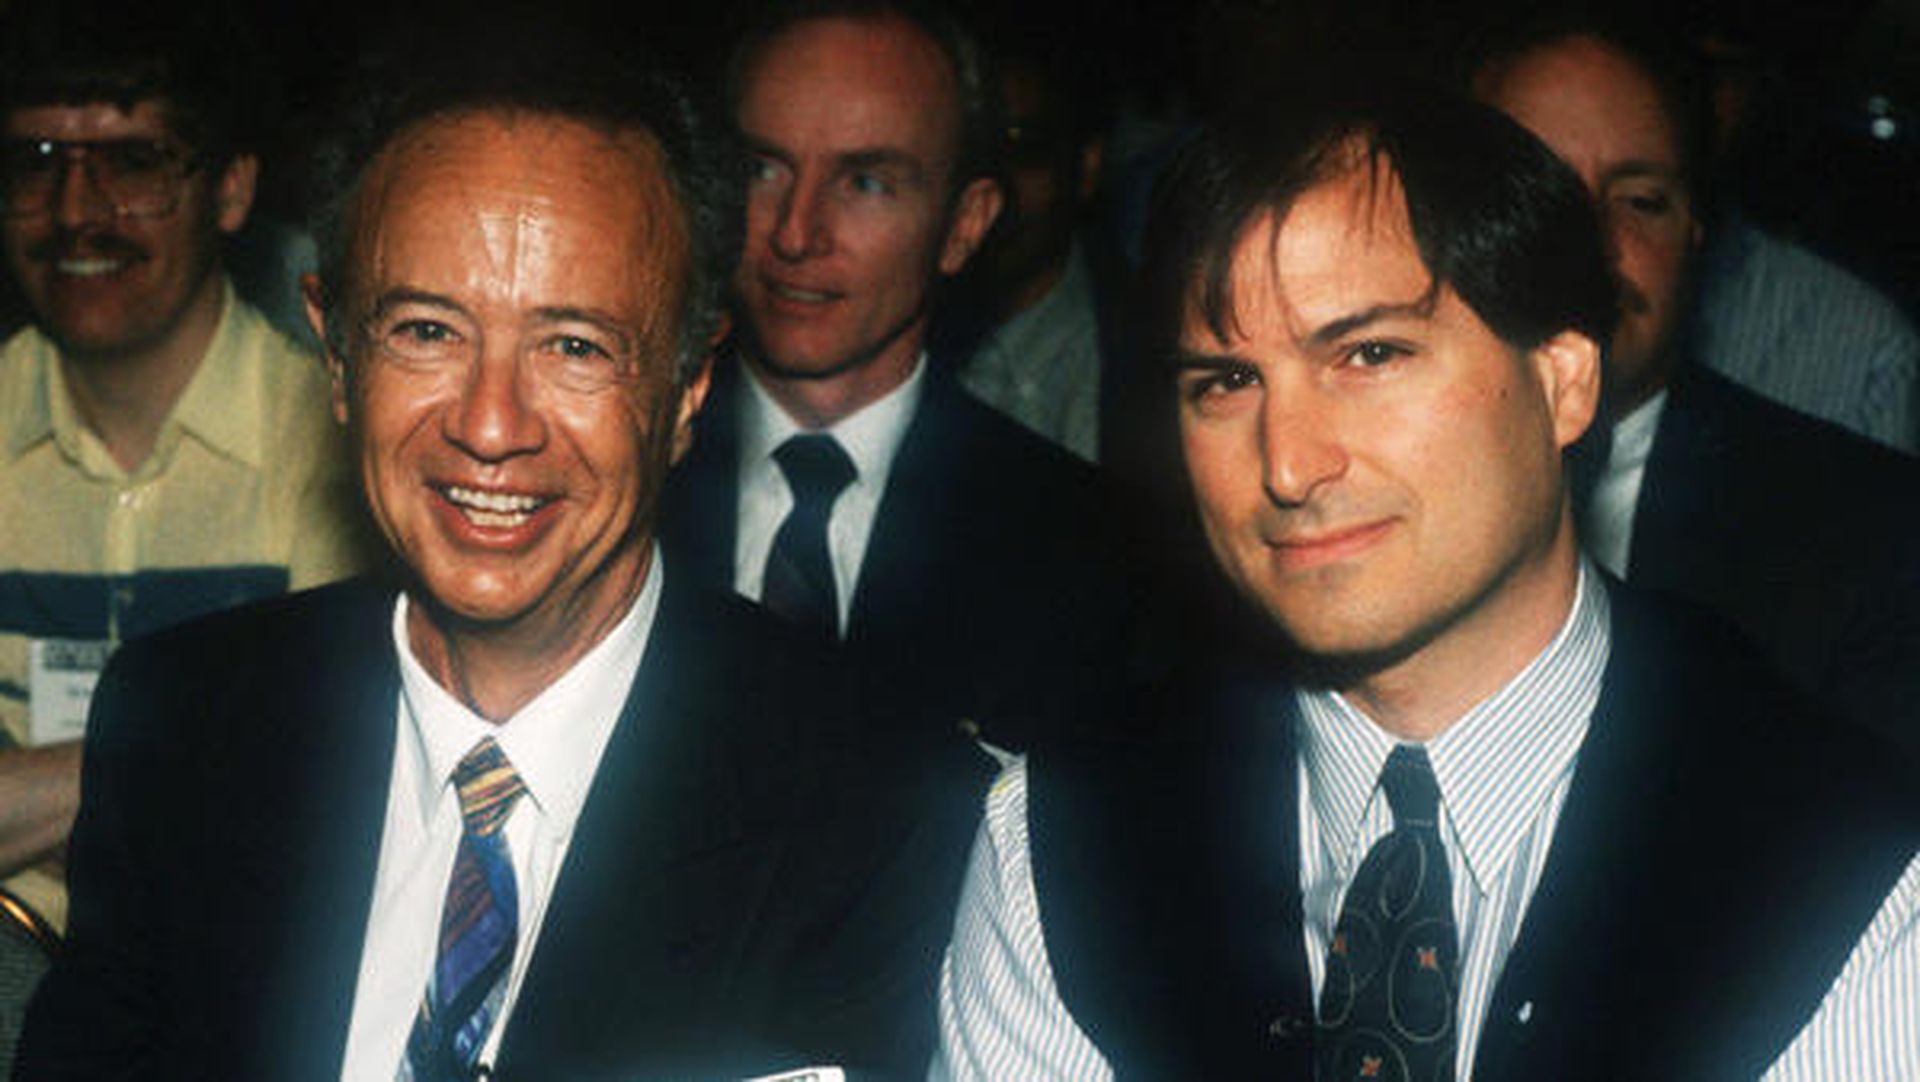 Andy Grove and Steve Jobs